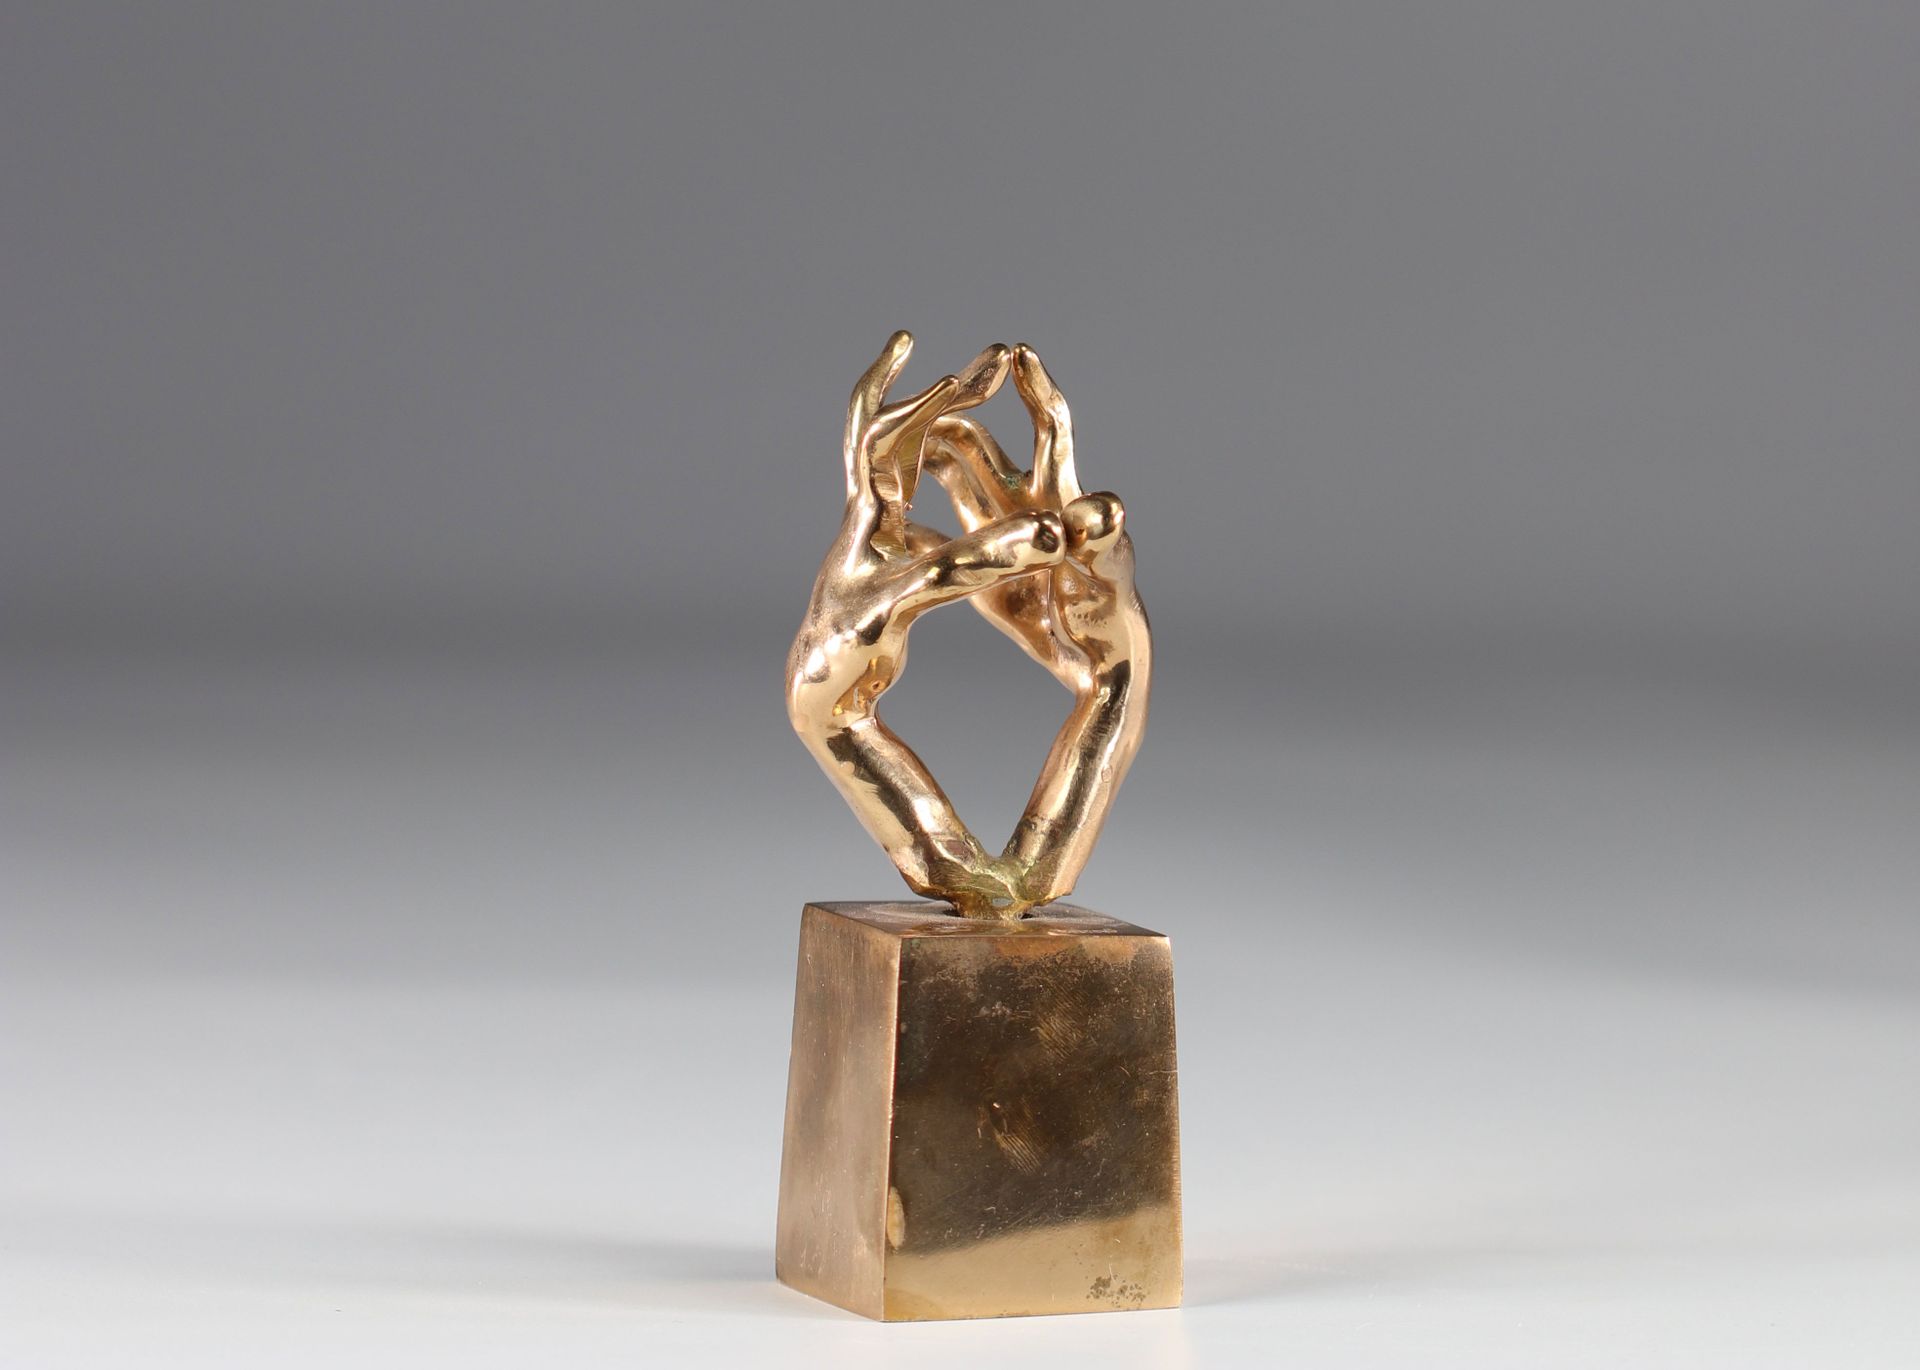 Yves LOHE sculpture en bronze "les mains" Yves LOHE escultura de bronce "manos"
&hellip;